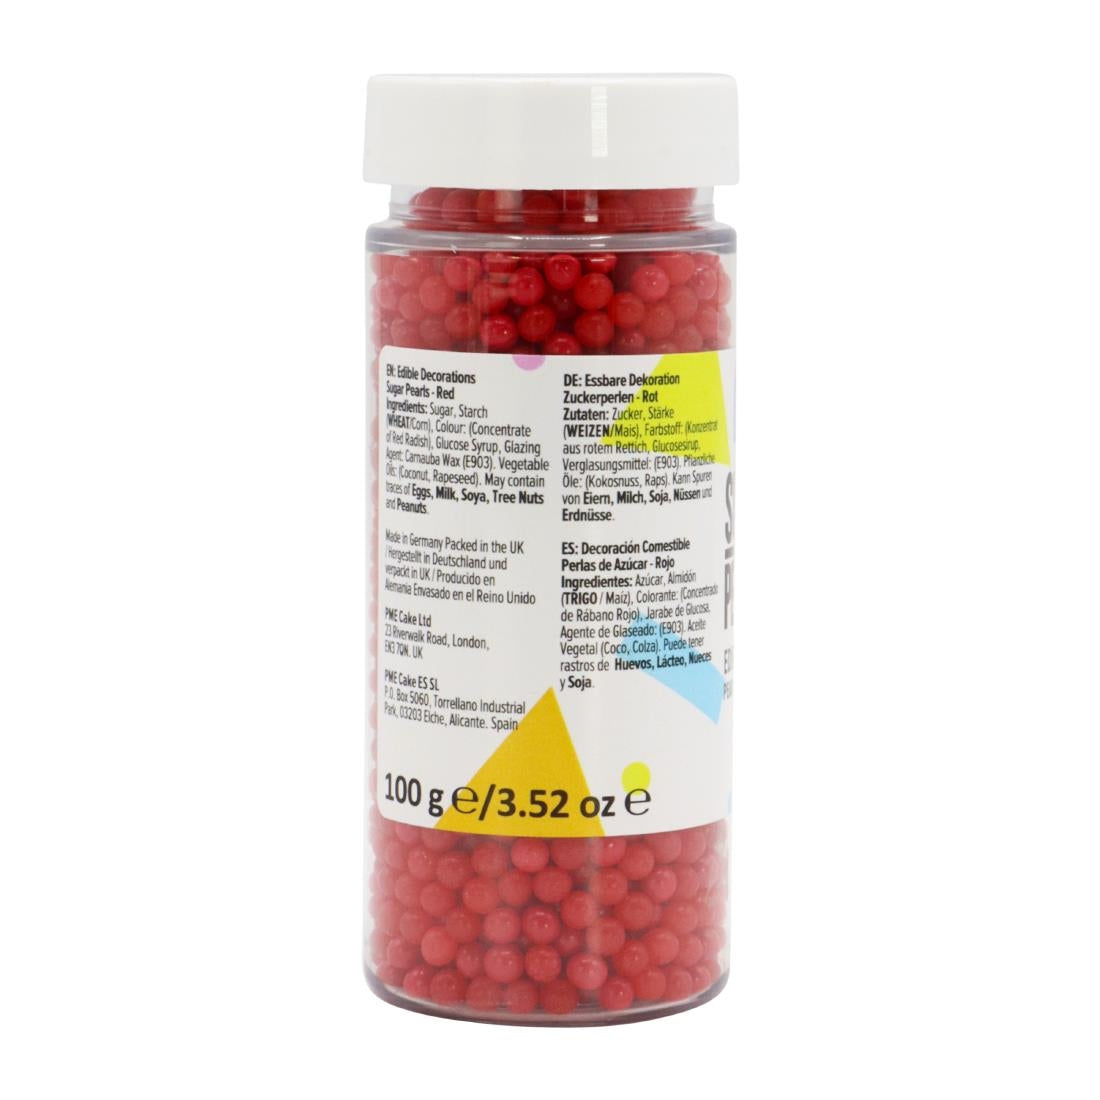 HU209 PME Sugar Pearls 100g - Red